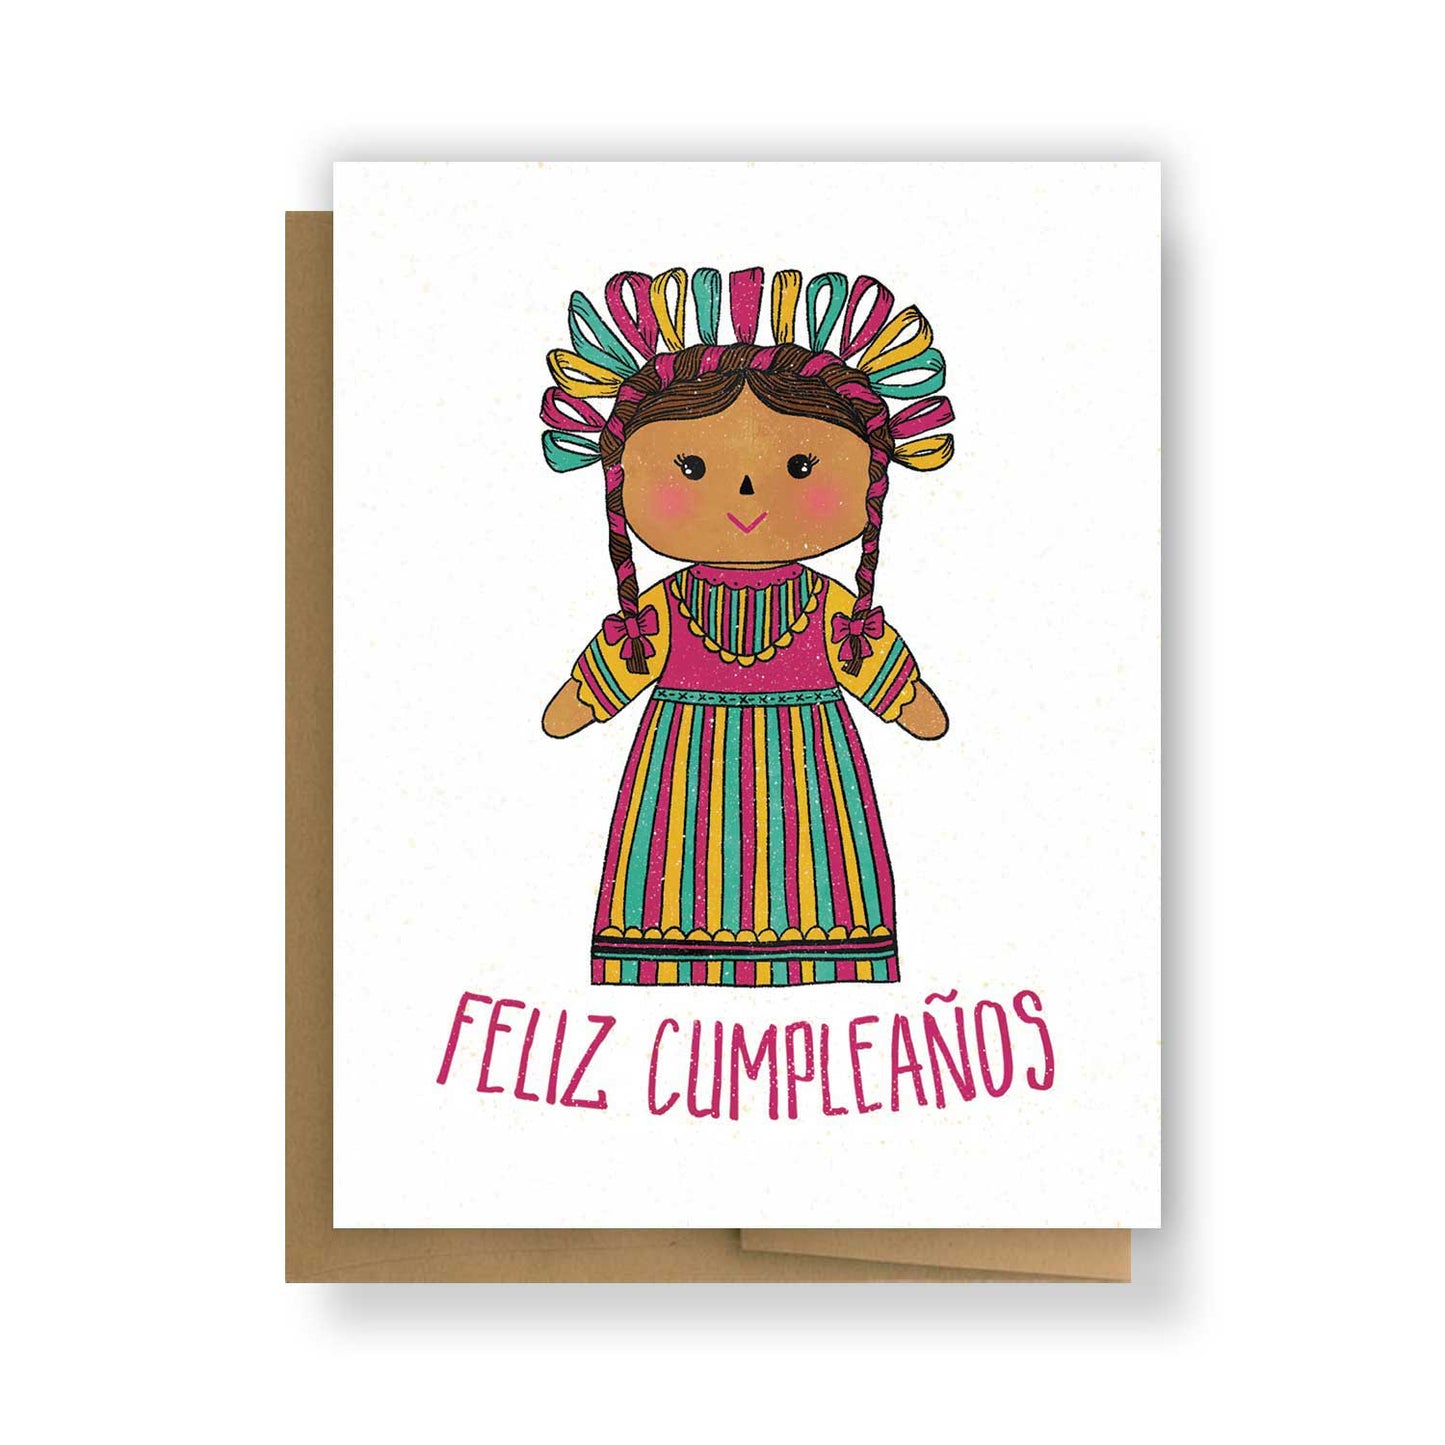 Maria Muñeca Feliz Cumpleaños Greeting Card